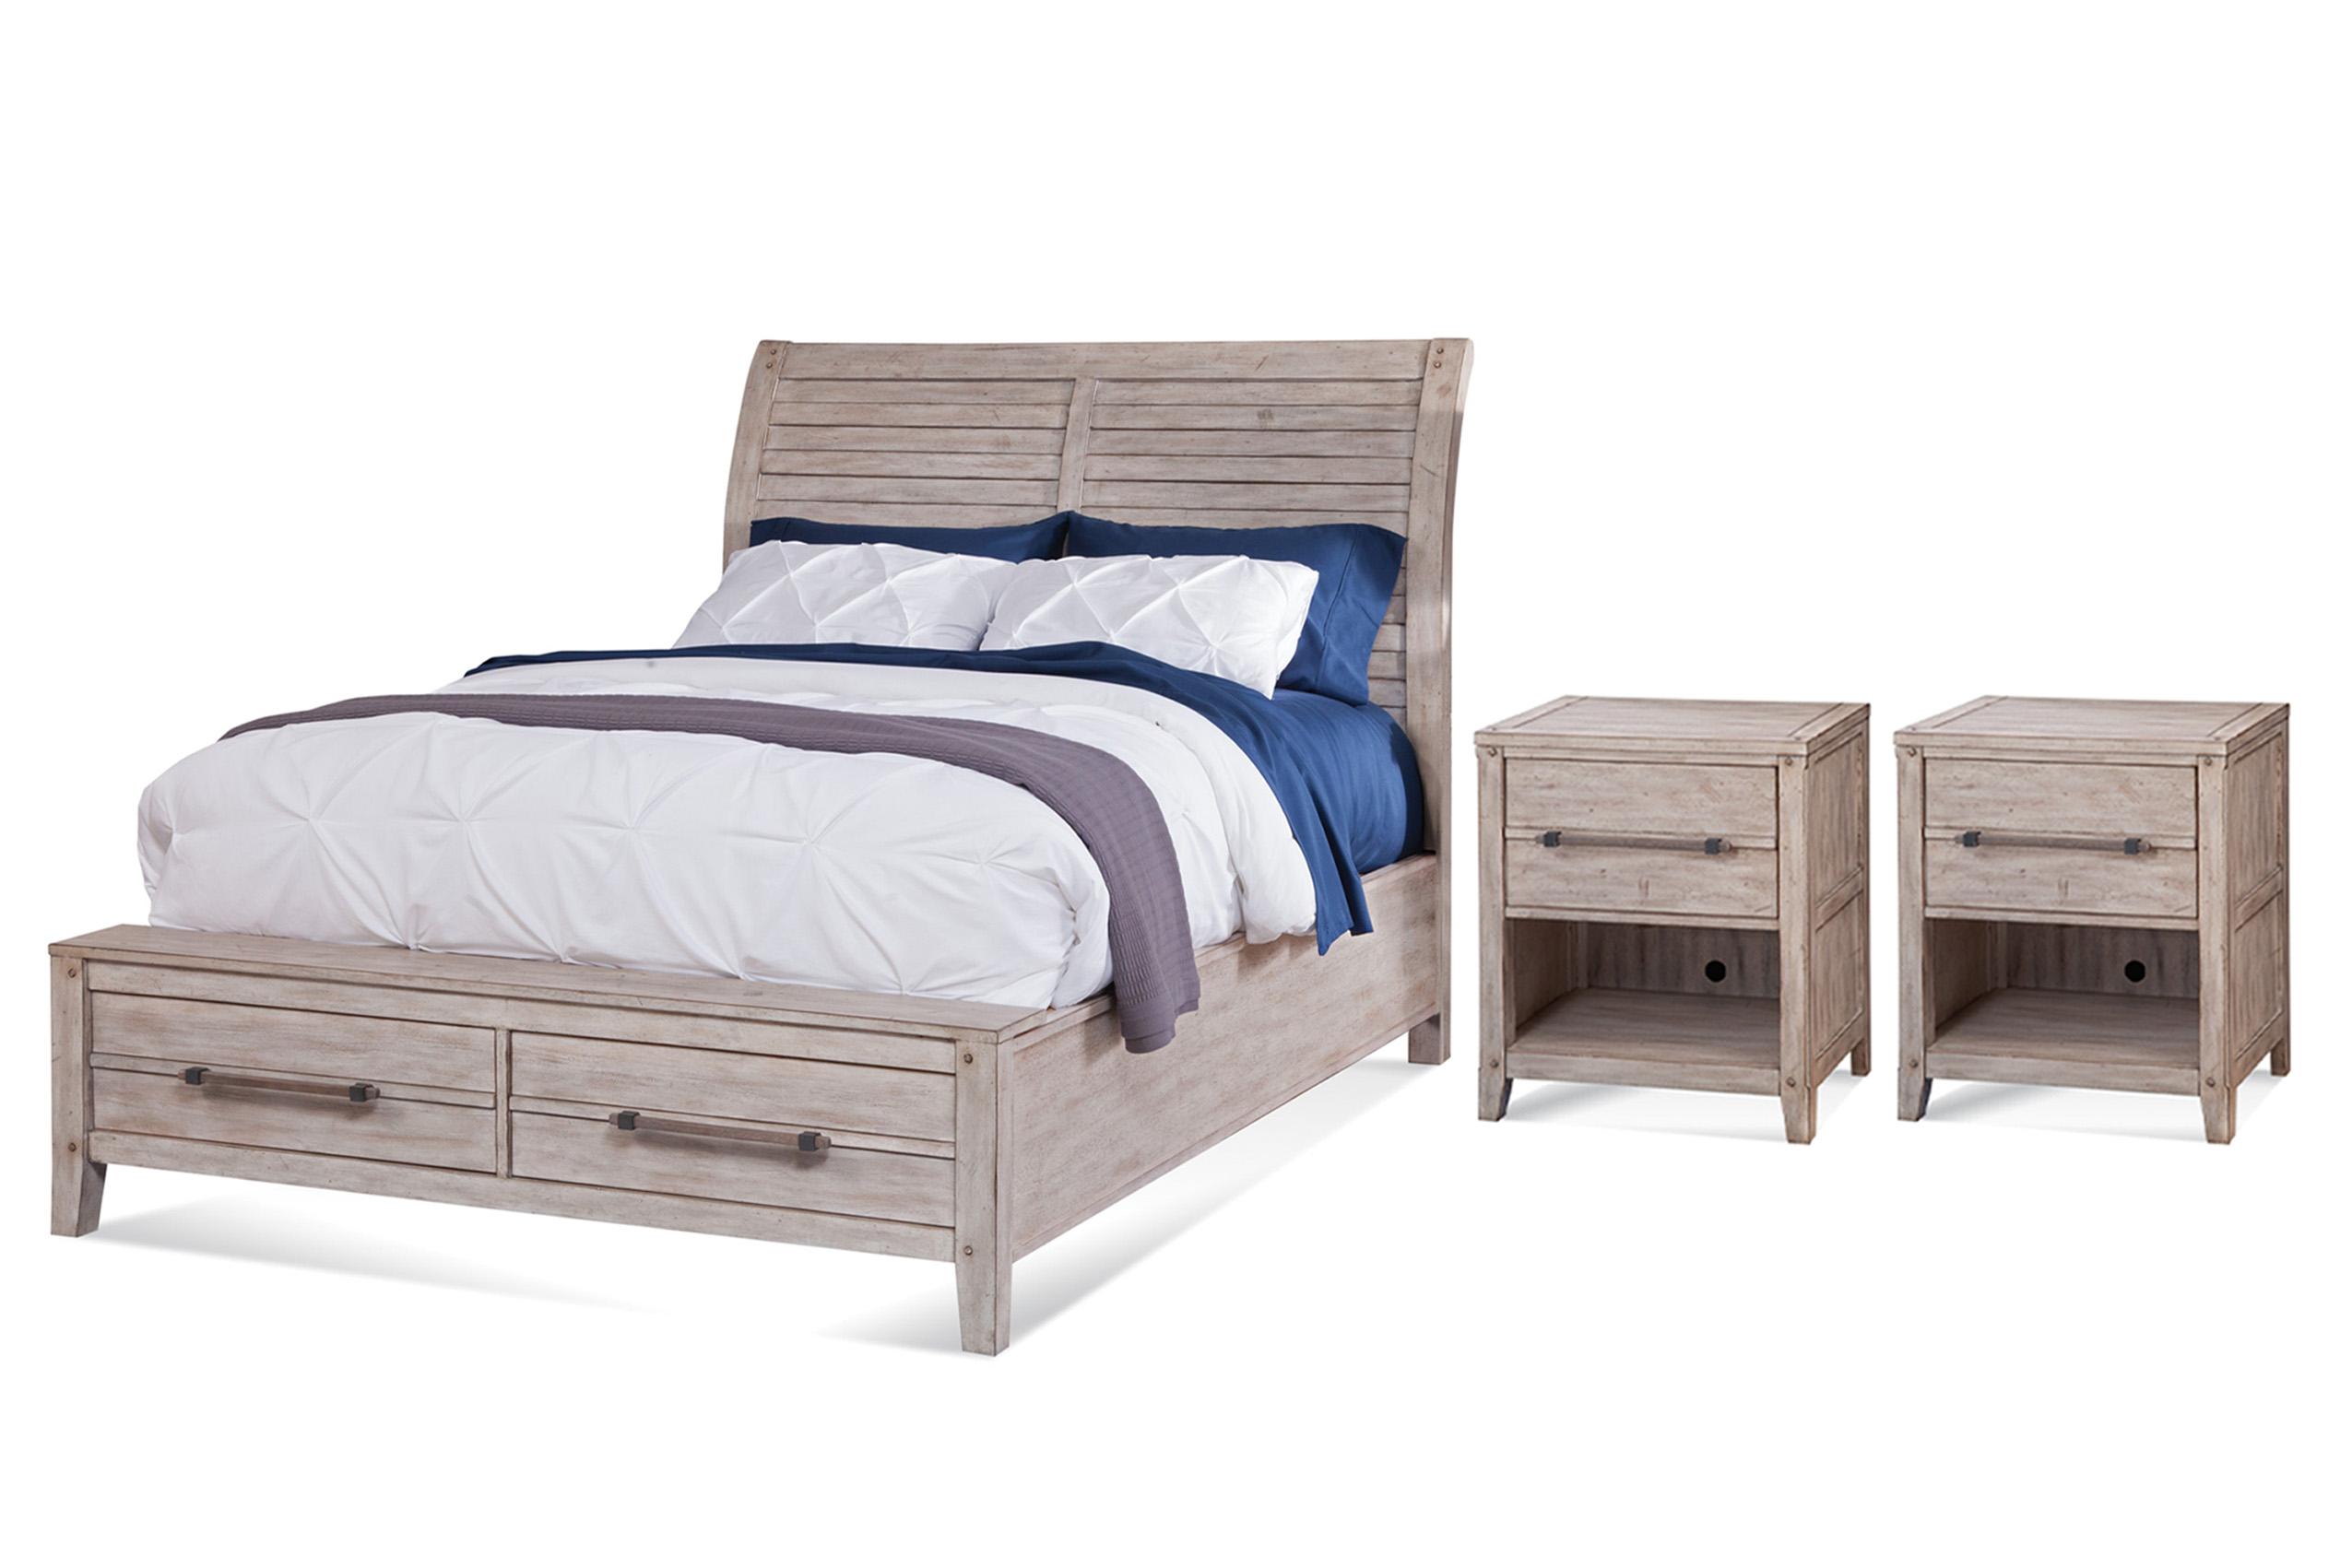 Classic, Traditional Sleigh Bedroom Set AURORA 2810-50PSB 2810-50PSB-2N-3PC in whitewash 